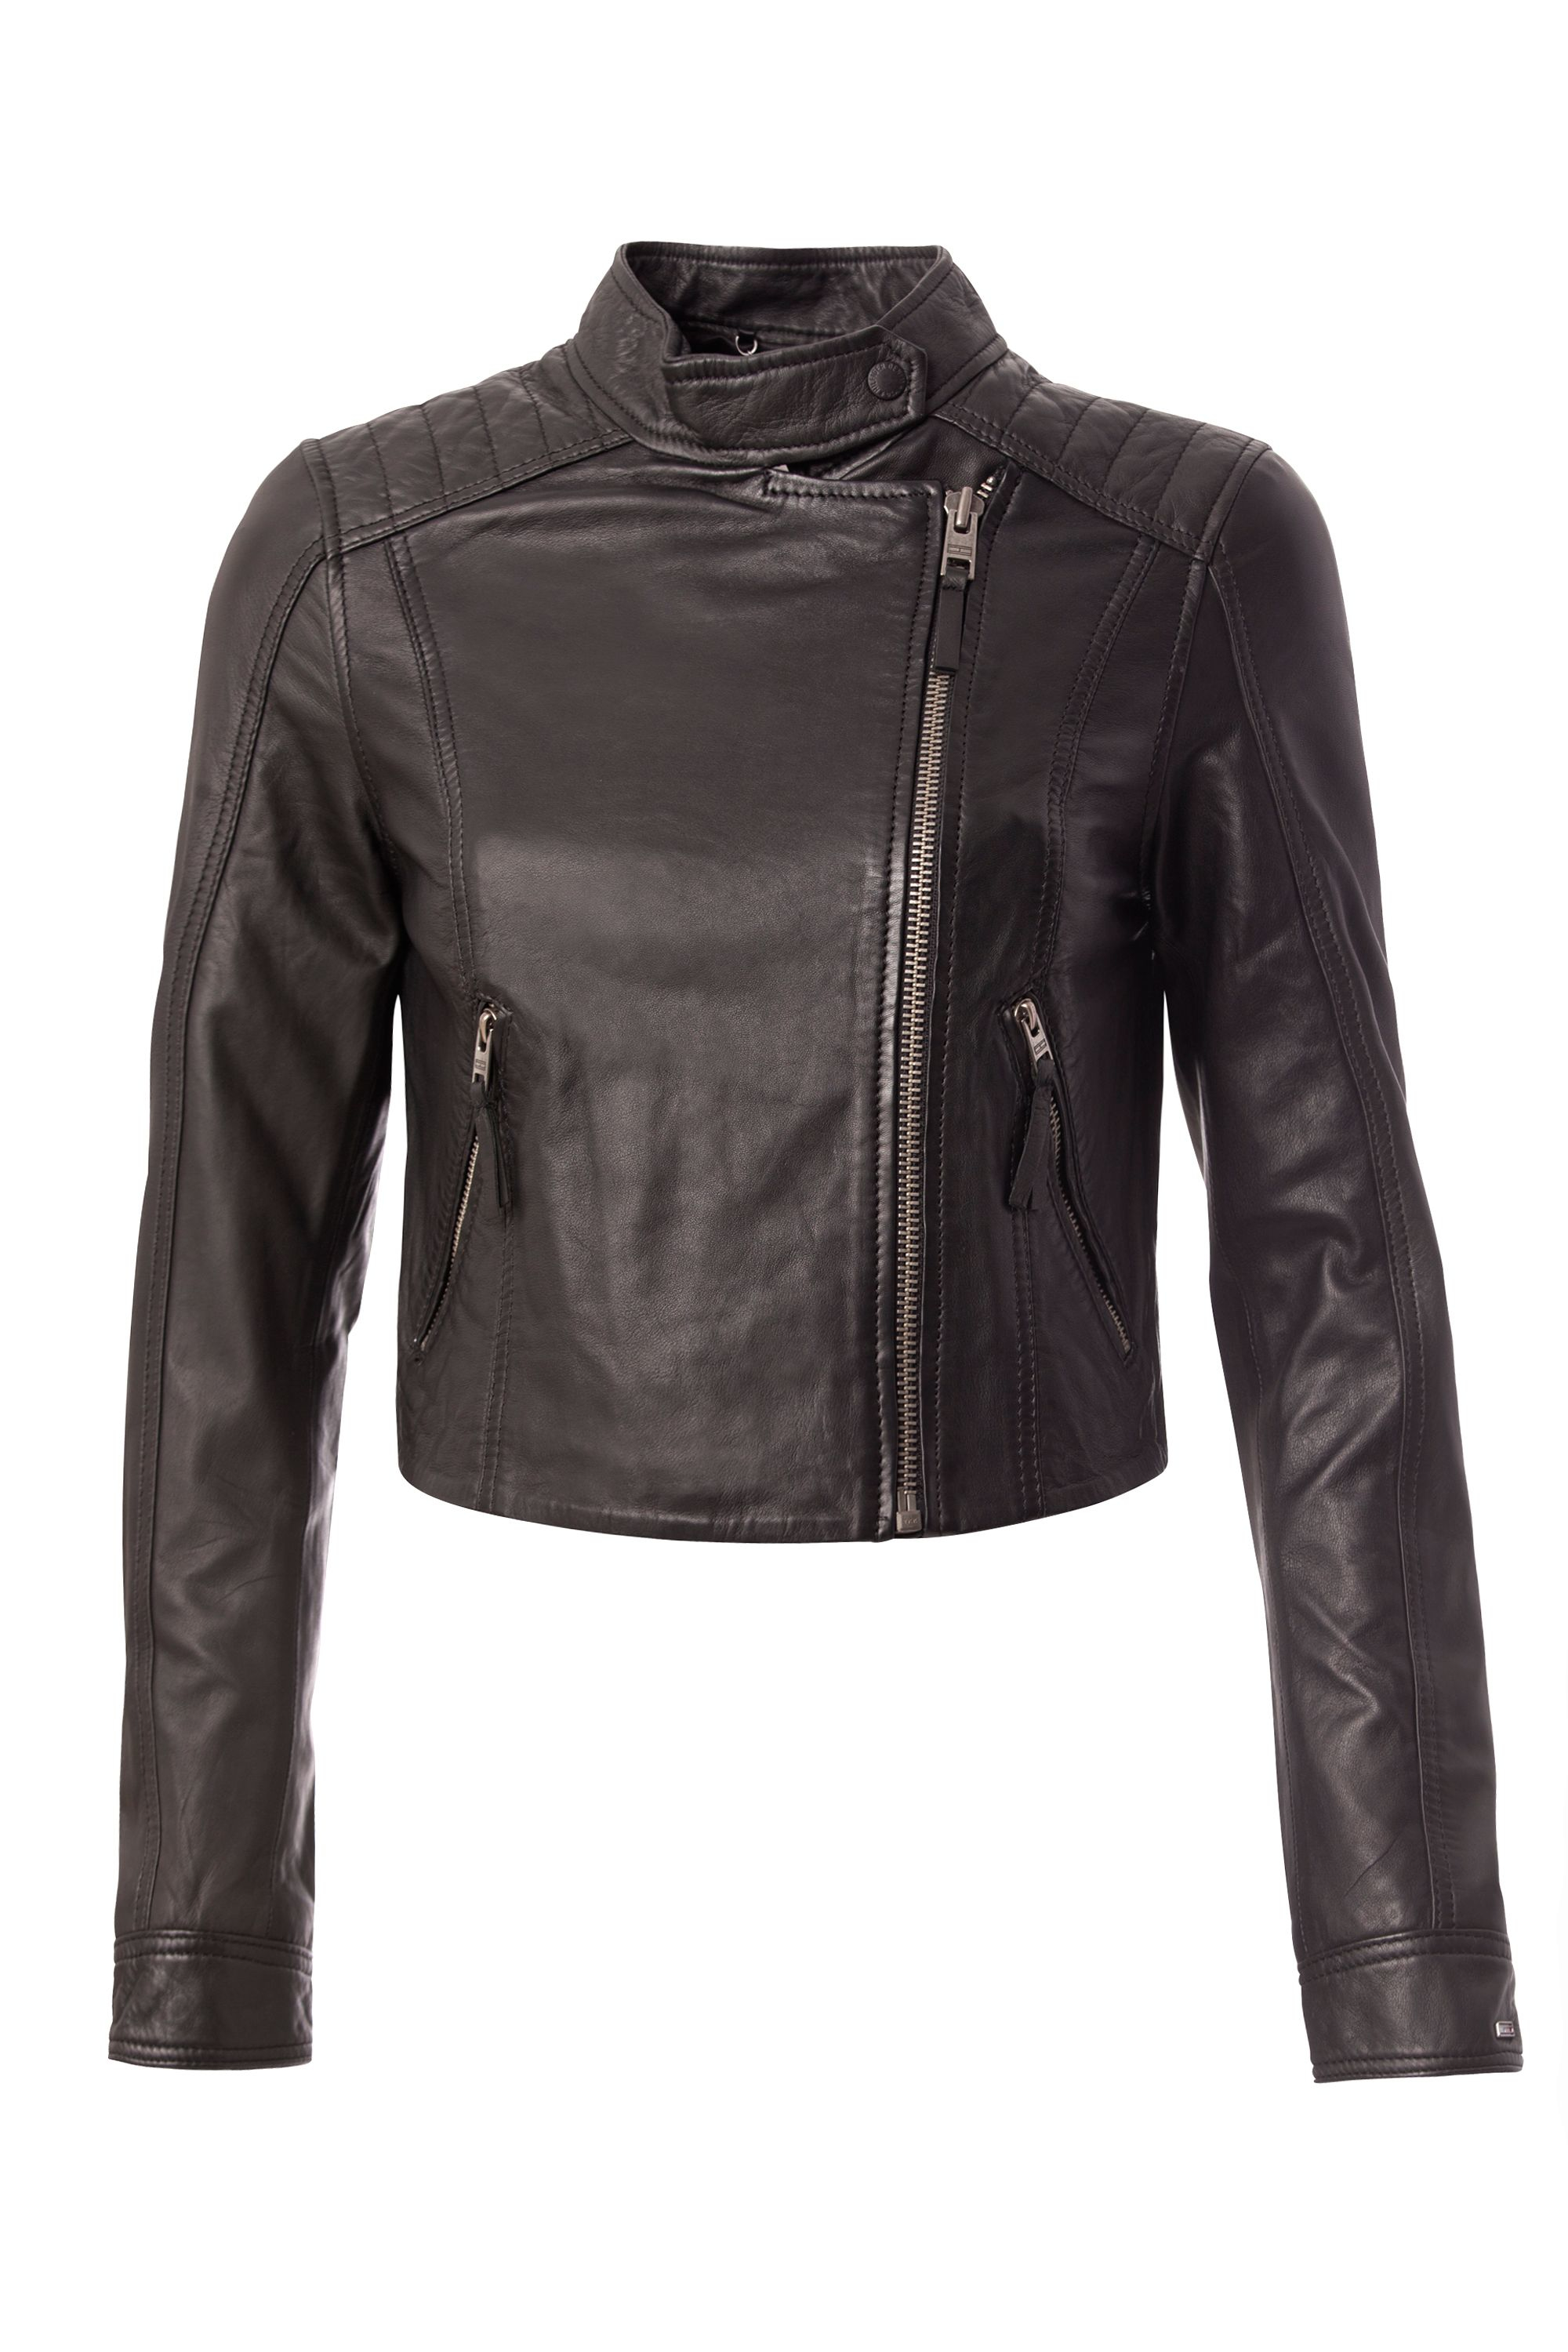 Tommy hilfiger Leather Biker Jacket in Black | Lyst